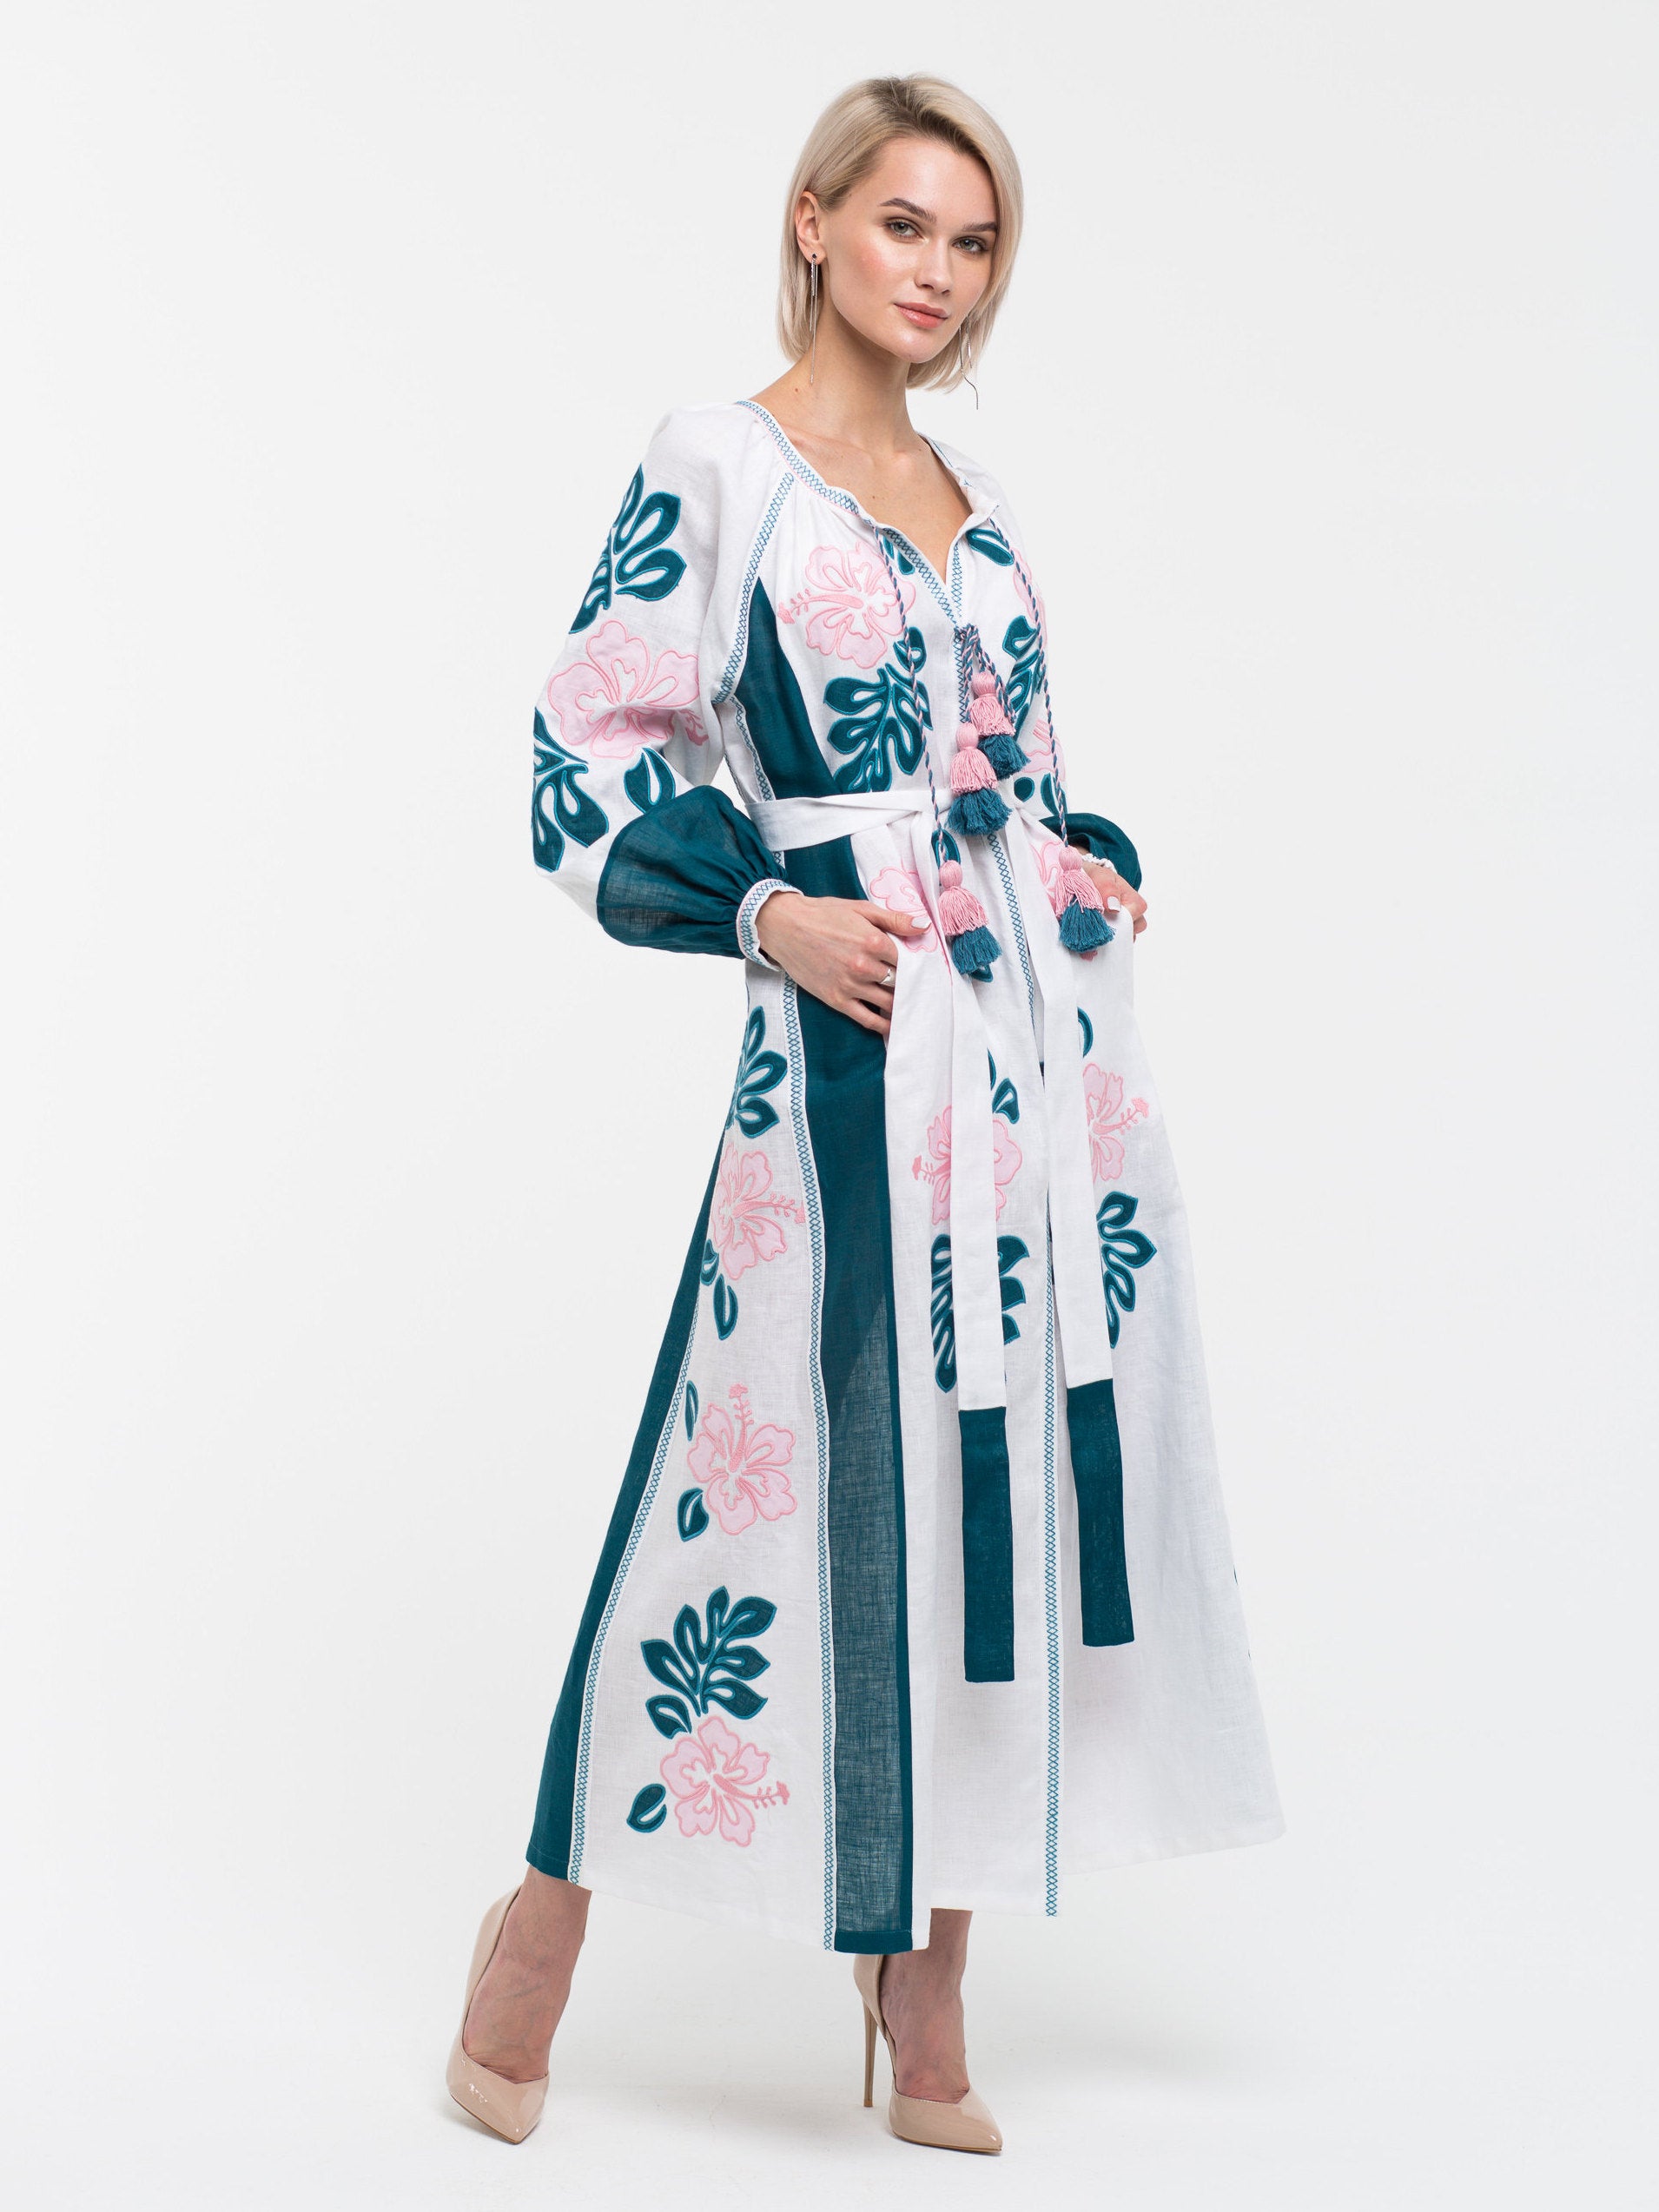 Fashion tropical embroidered dress with applique embroidery White linen boho dress maxi kaftan Ukrainian floral clothing vyshyvanka